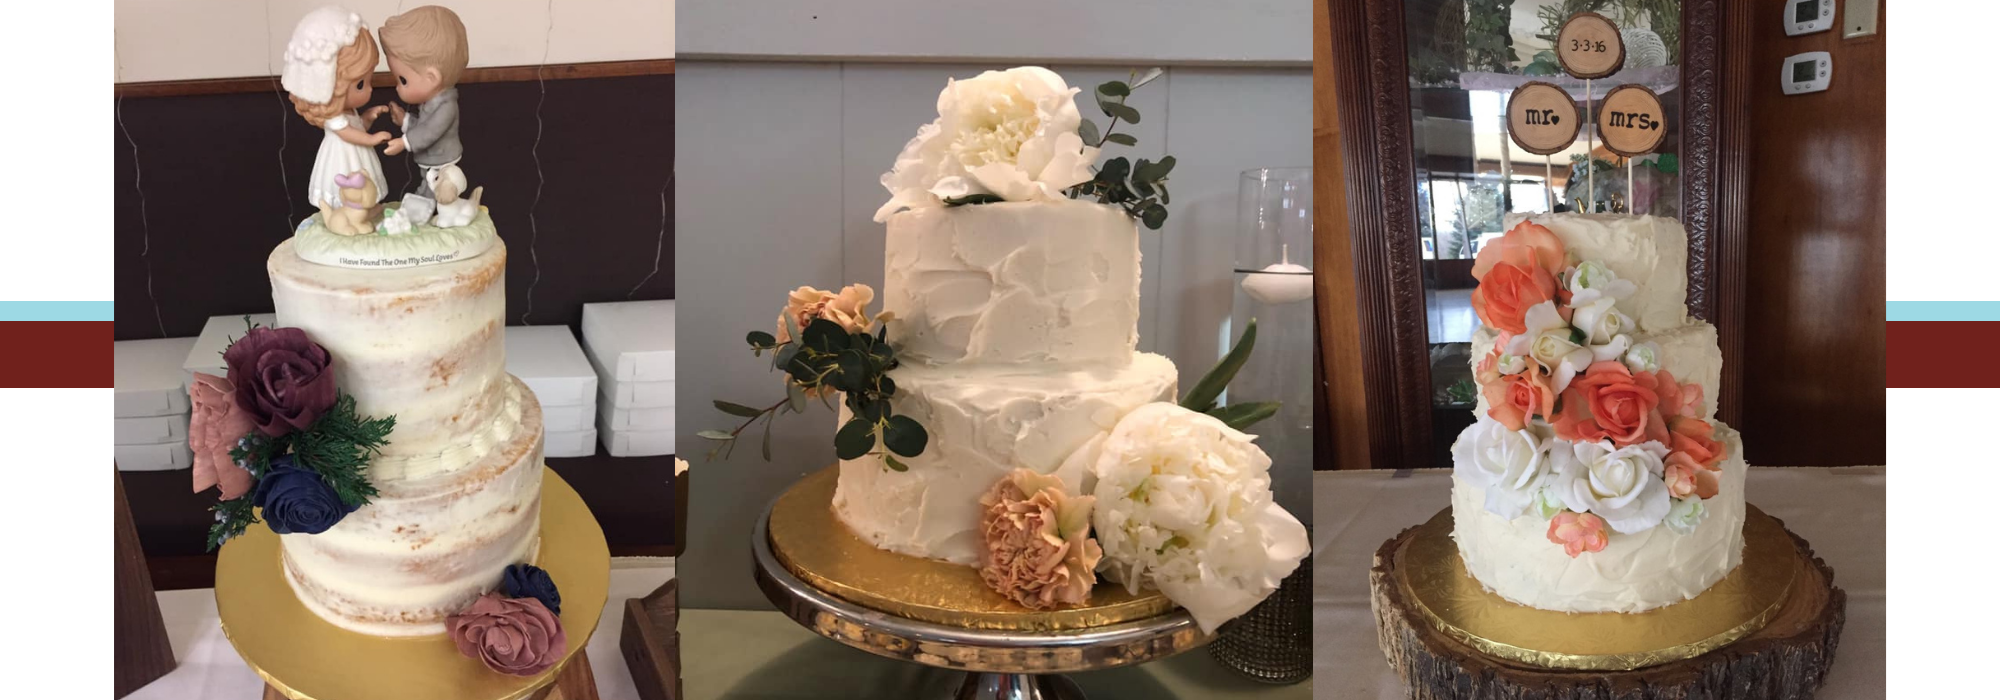 wedding cake collage 